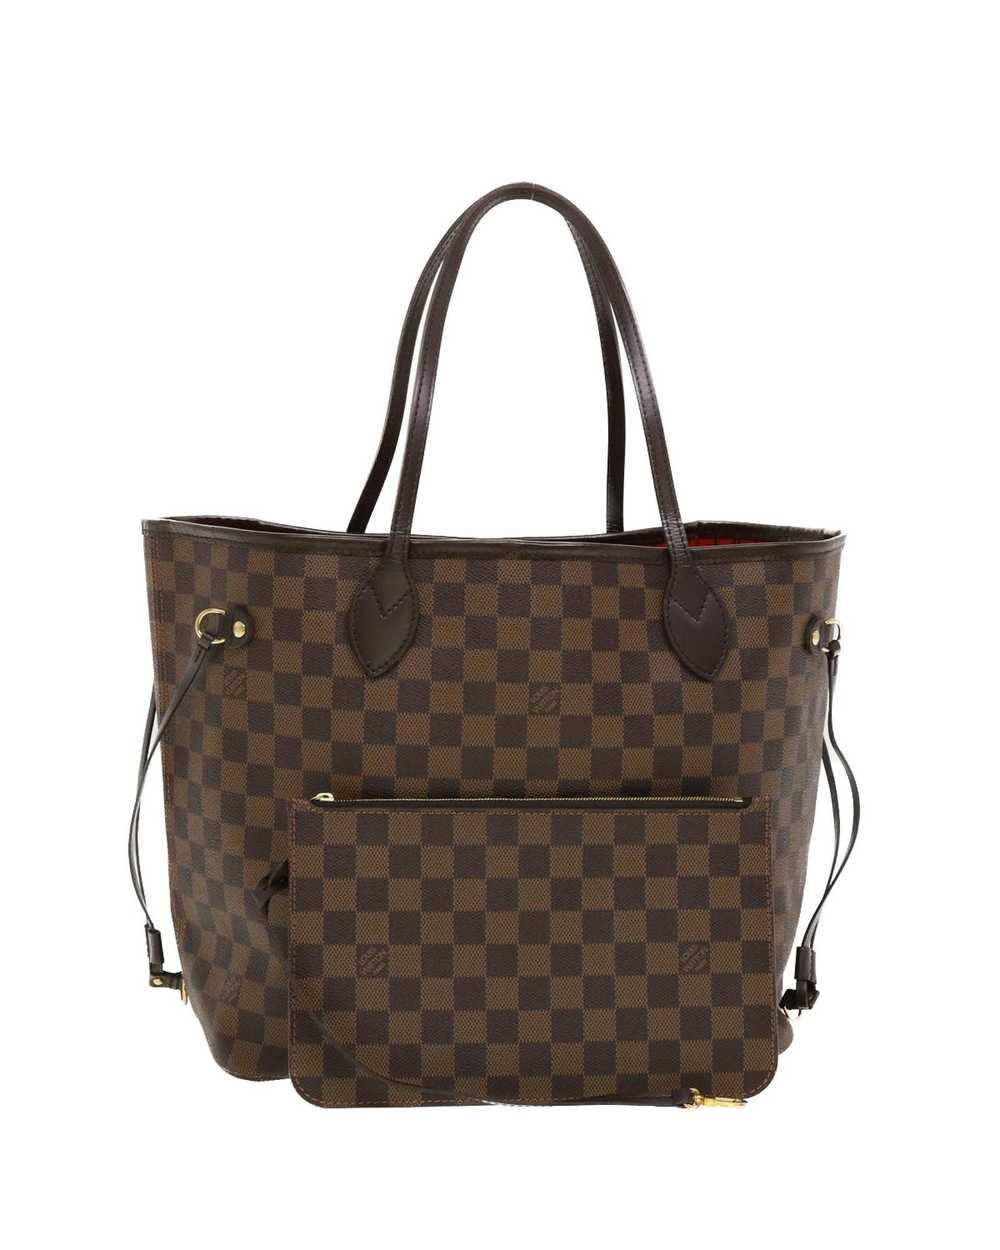 Louis Vuitton Classic Damier Ebene Tote Bag - image 1